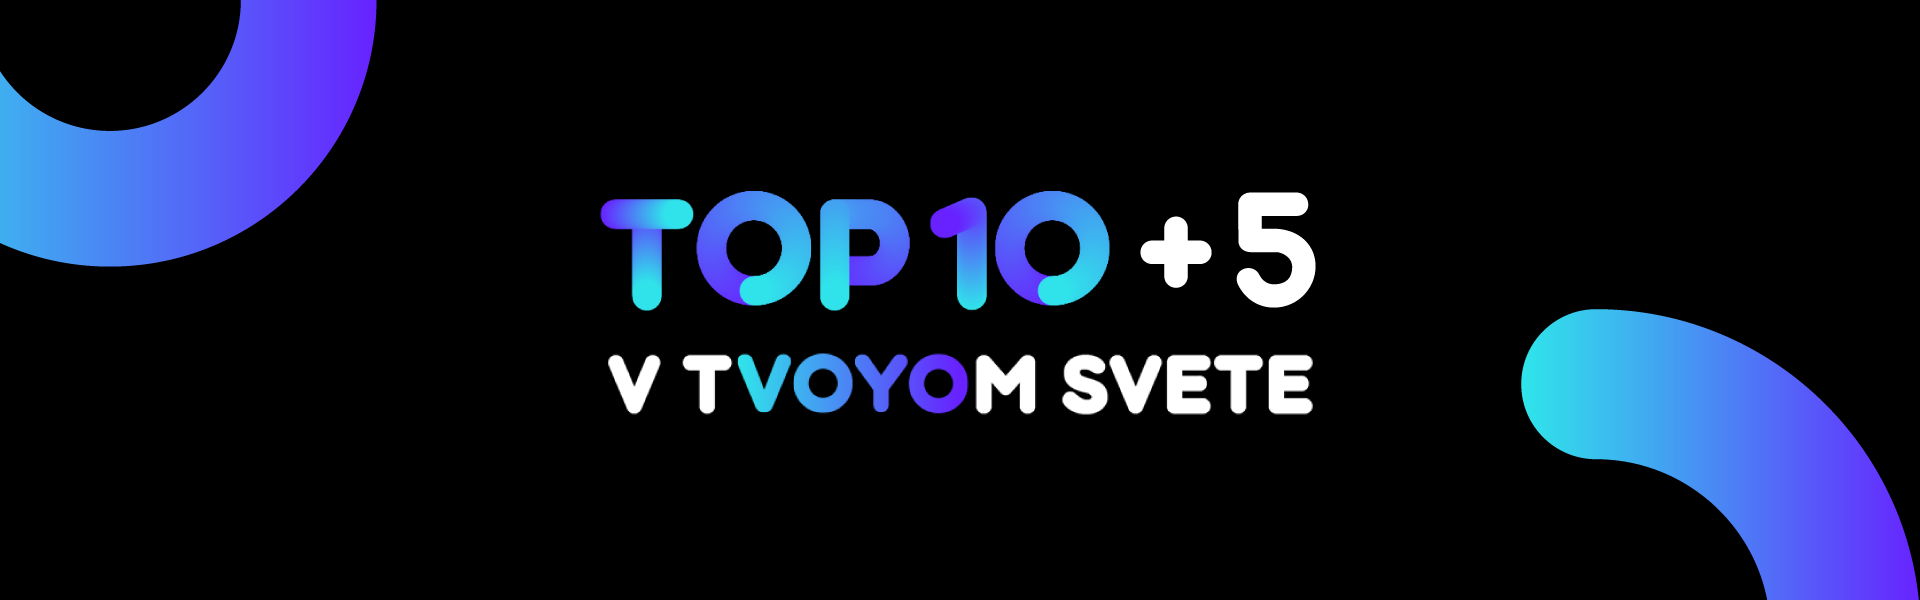 Voyo News TOP 10+5